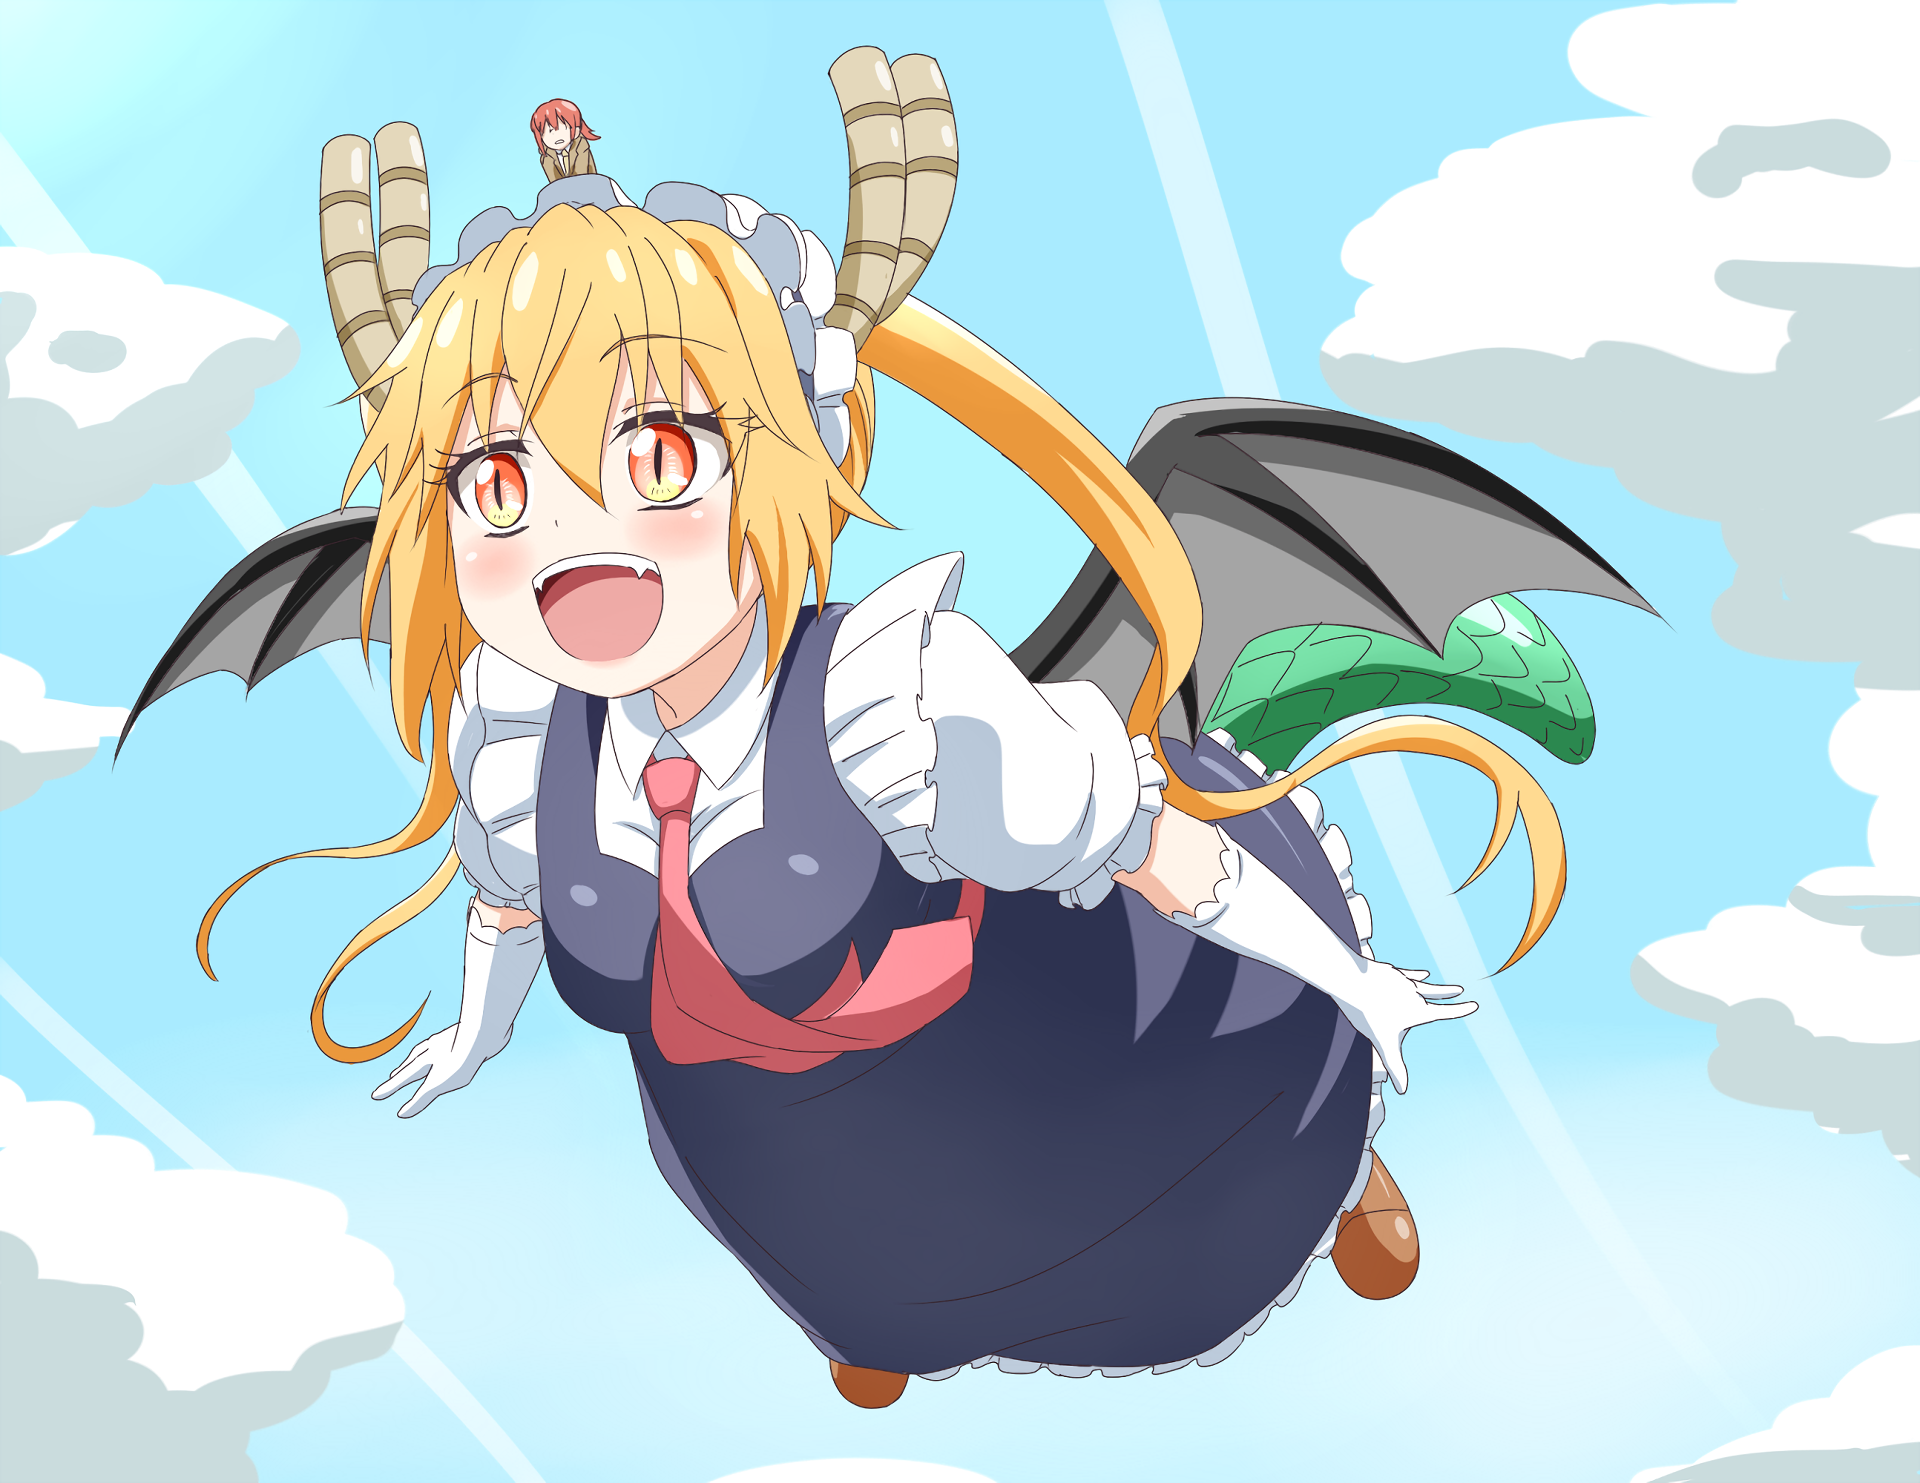 Miss Kobayashi's Dragon Maid #7